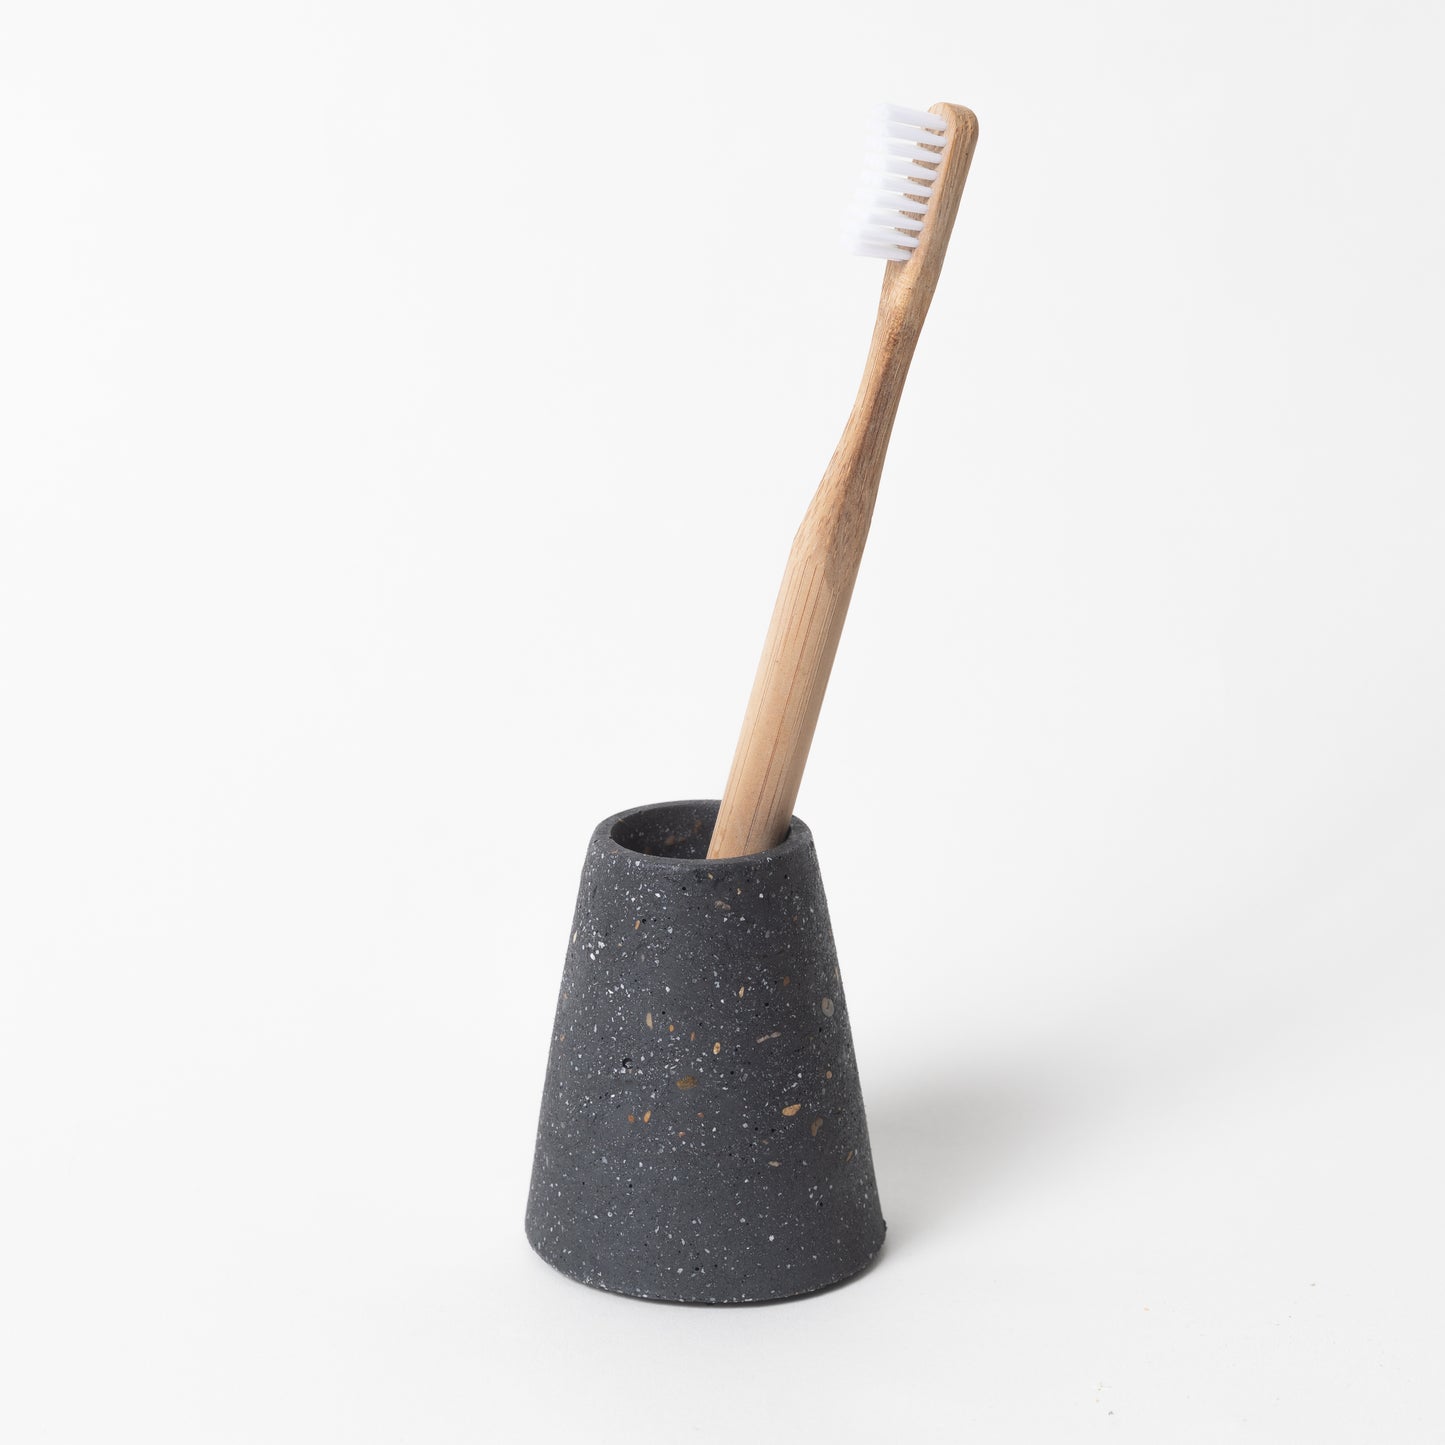 Concrete terrazzo toothbrush holder seen in black terrazzo holding toothbrush.